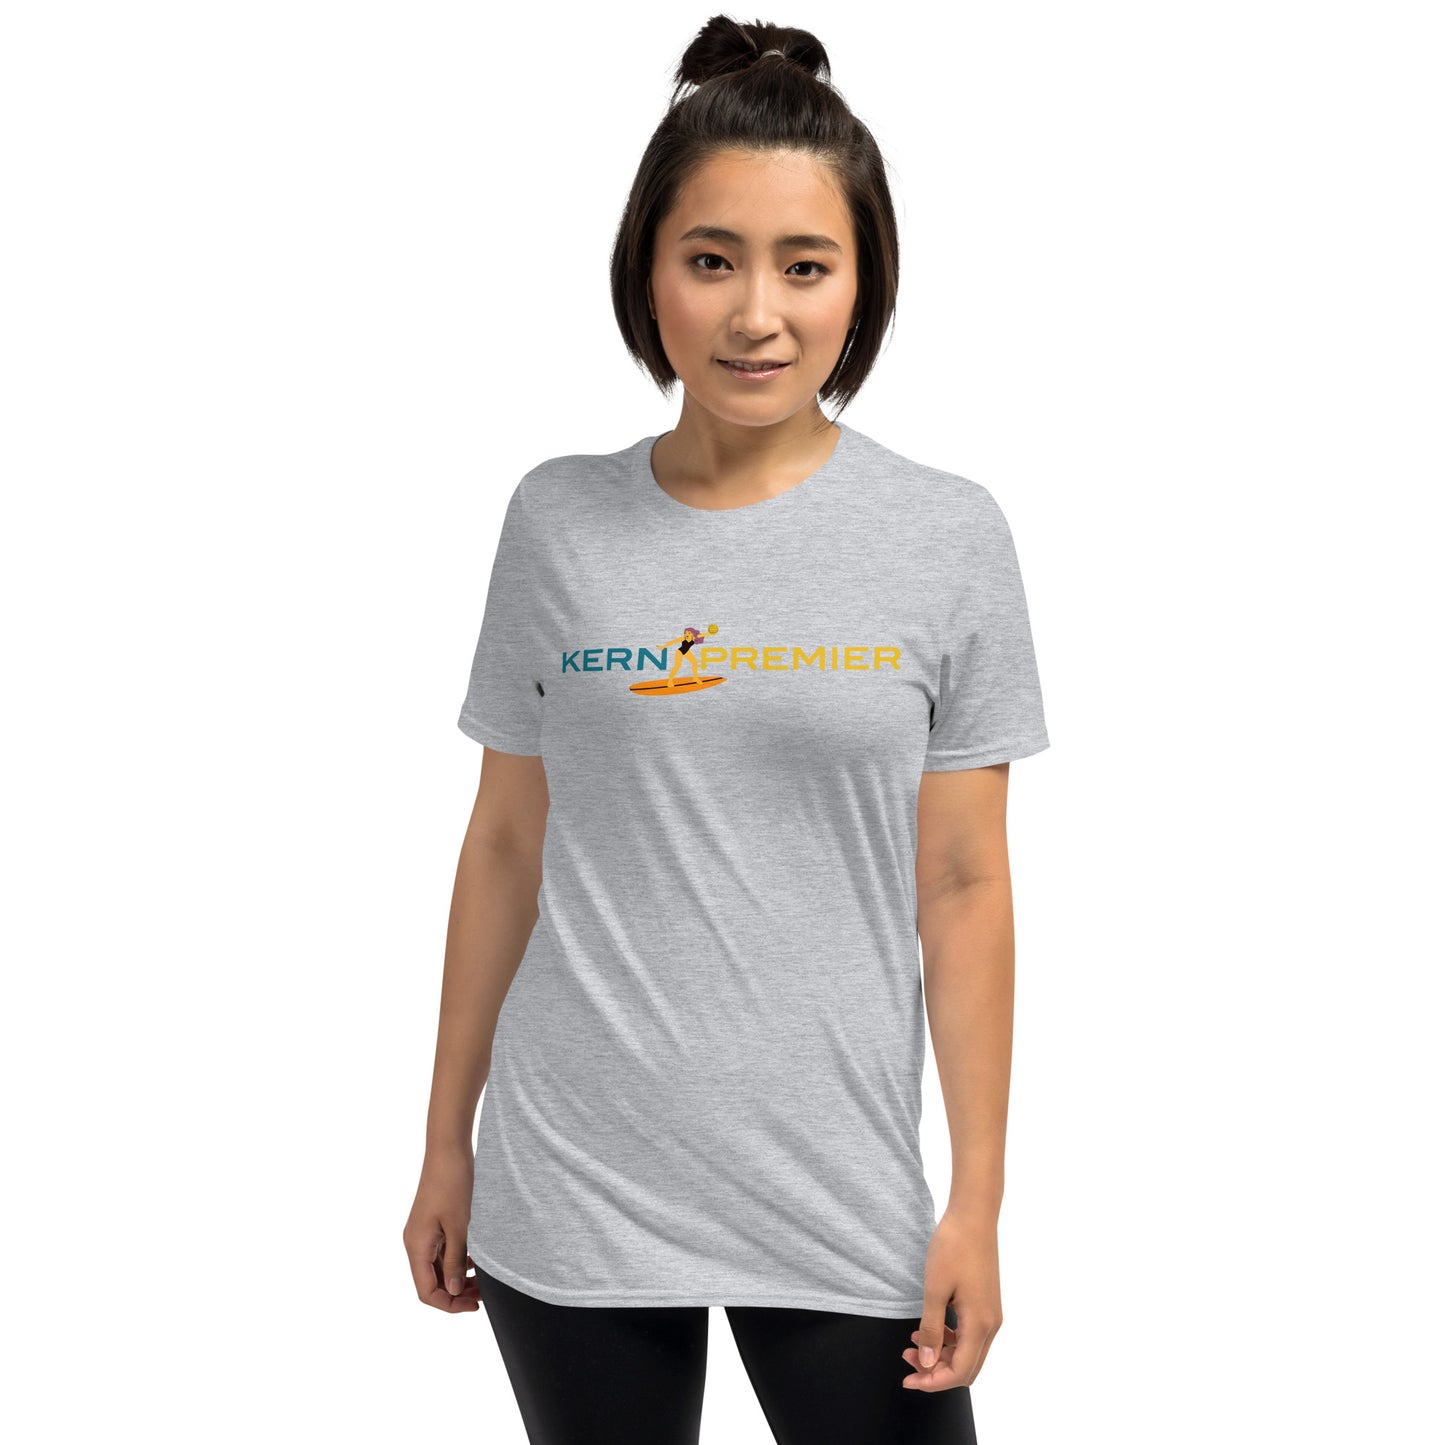 Kern Premier Junior Olympics girl Gildan Short-Sleeve Unisex T-Shirt